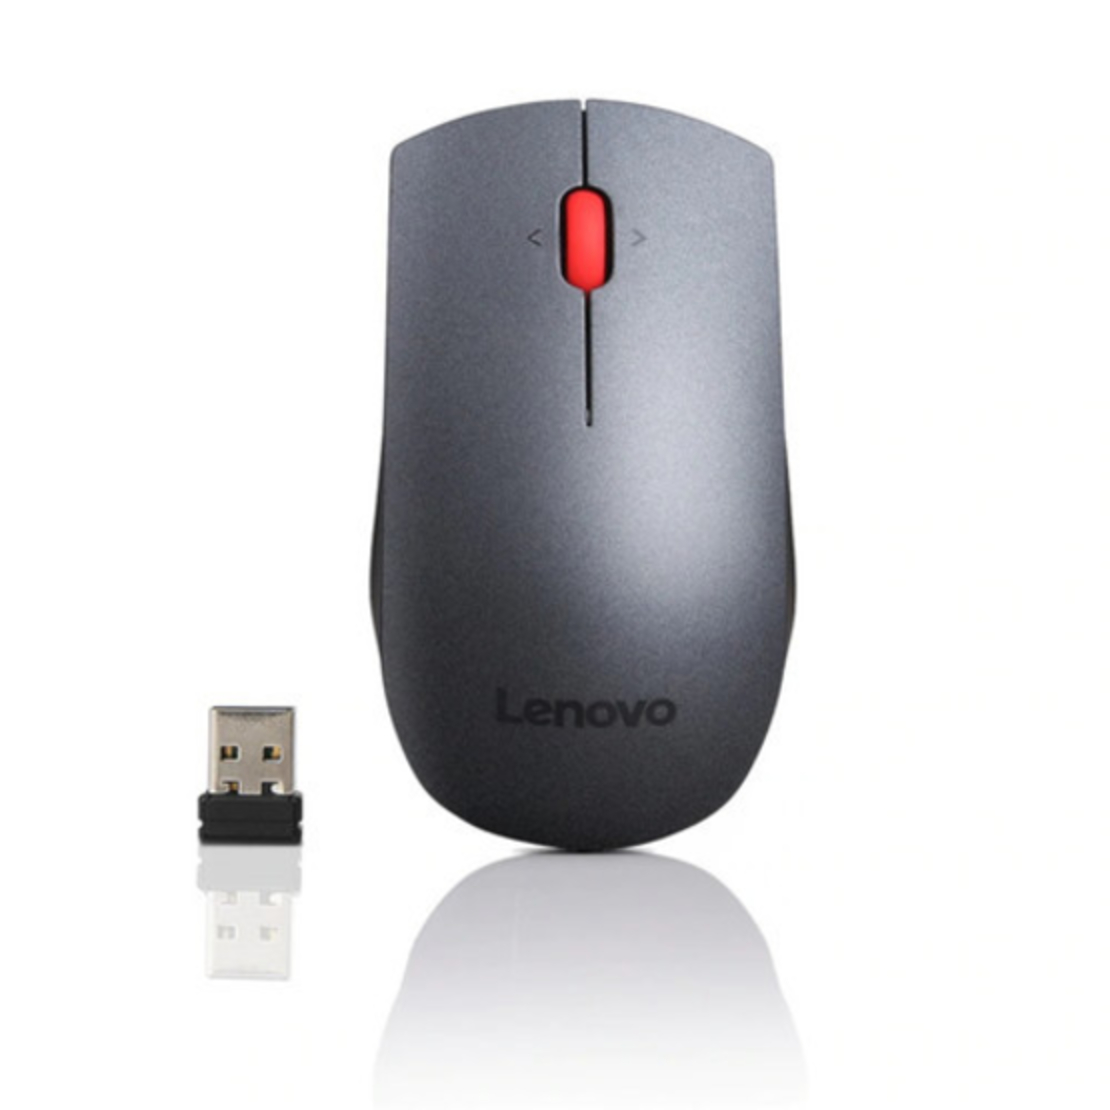 Lenovo 700 Wireless Laser Mouse - GX30N77981